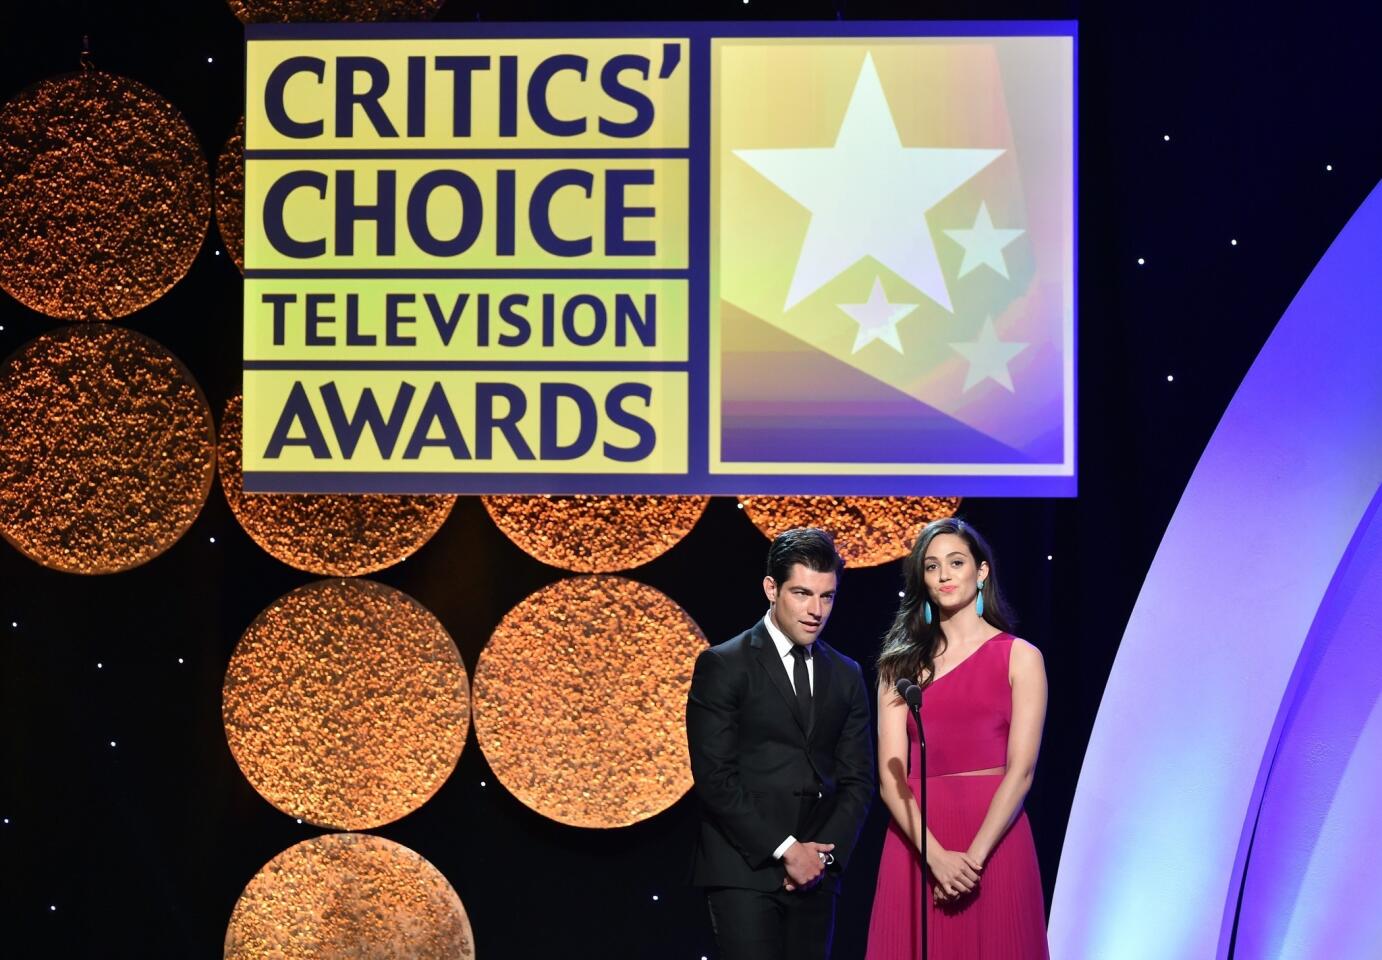 Critics' Choice Television Awards | Show highlights